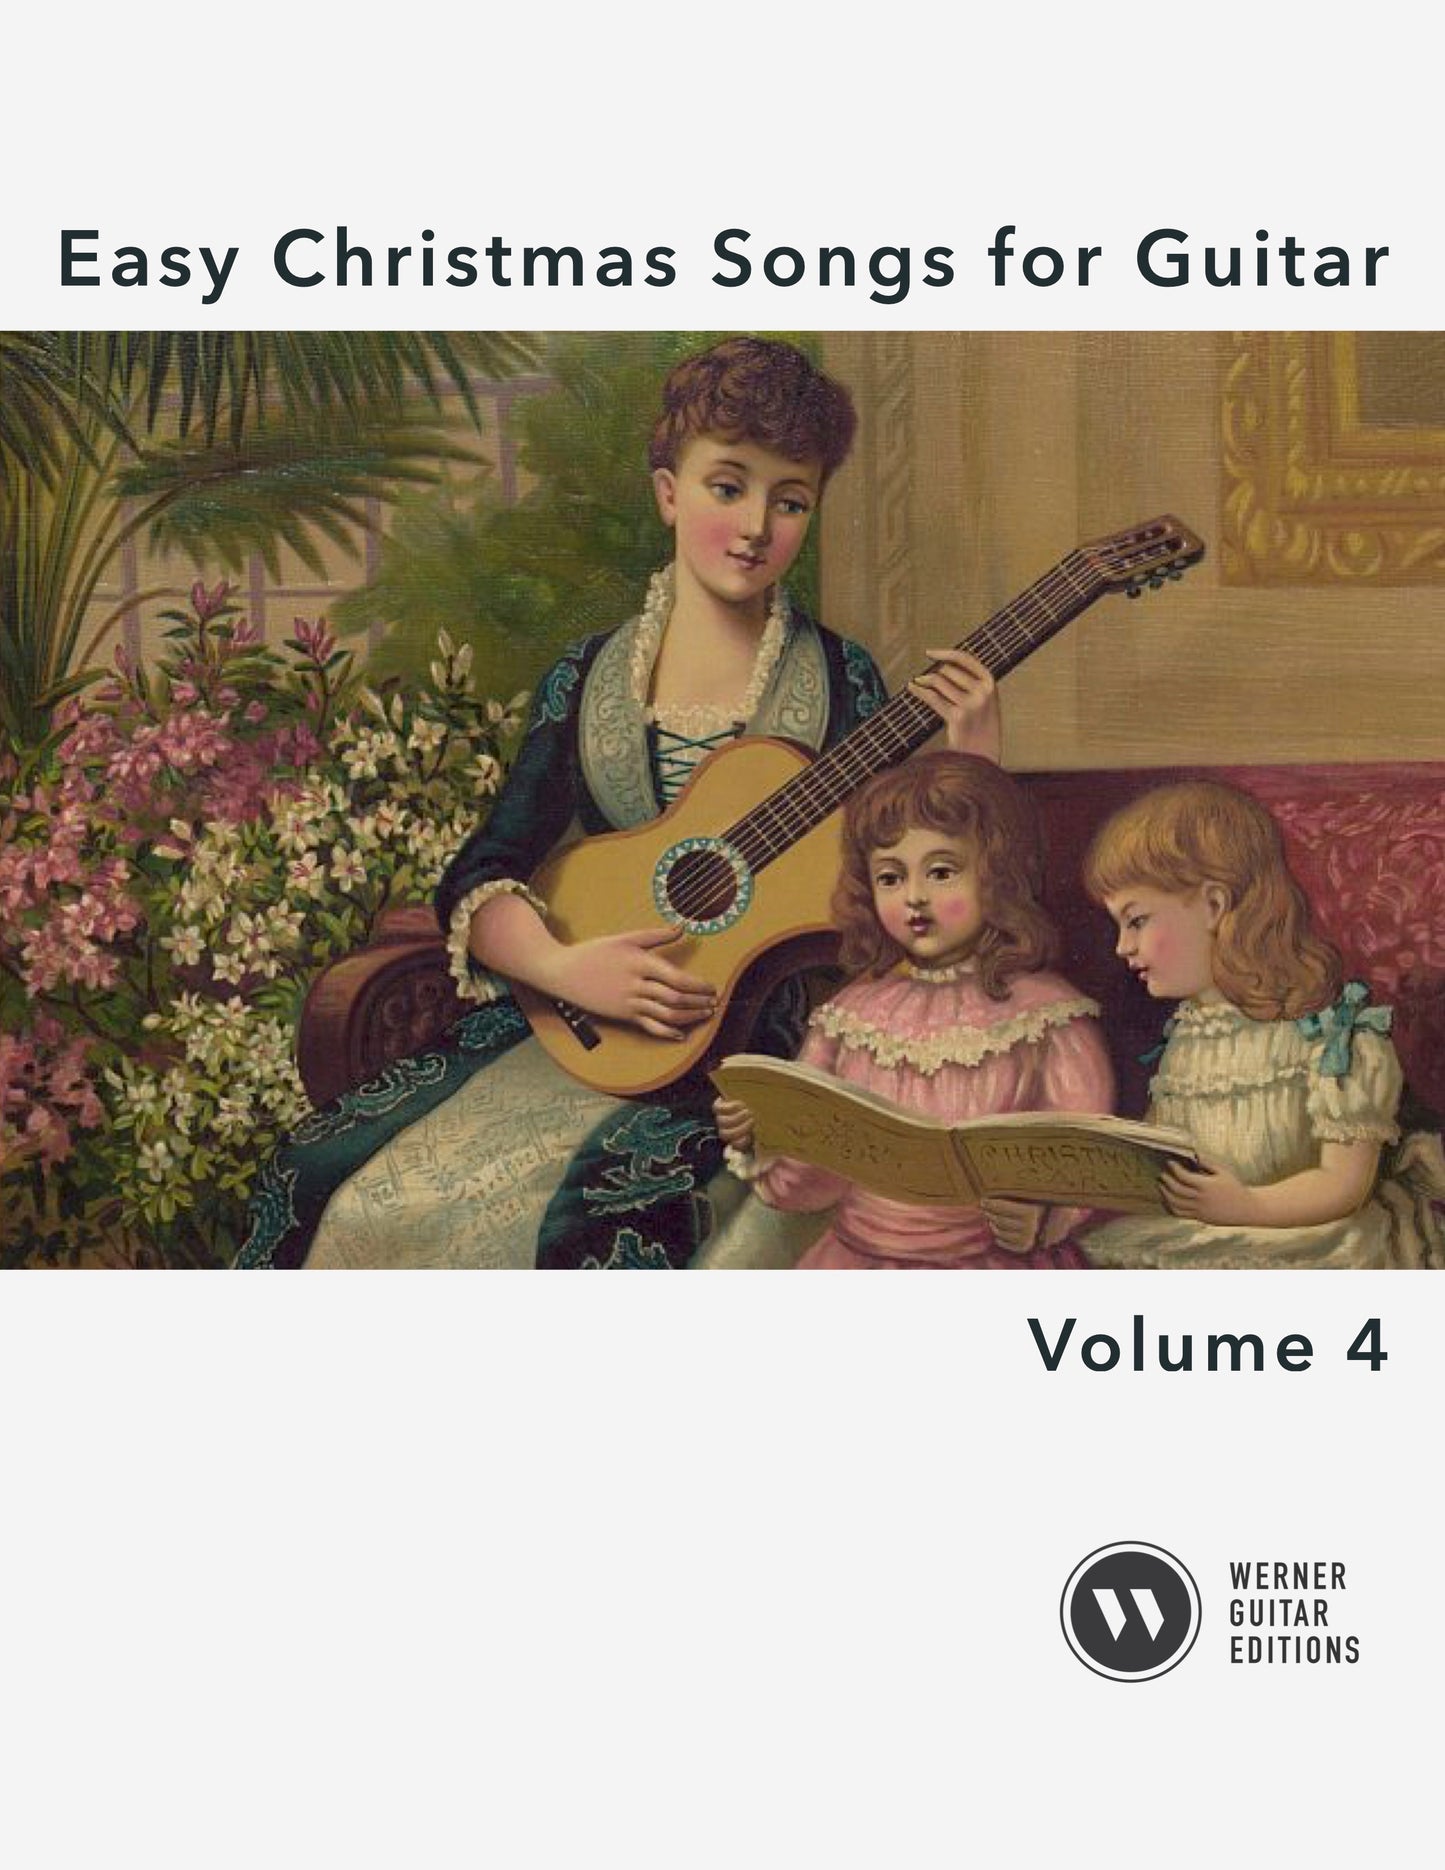 Easy Christmas Songs for Guitar Vol.4